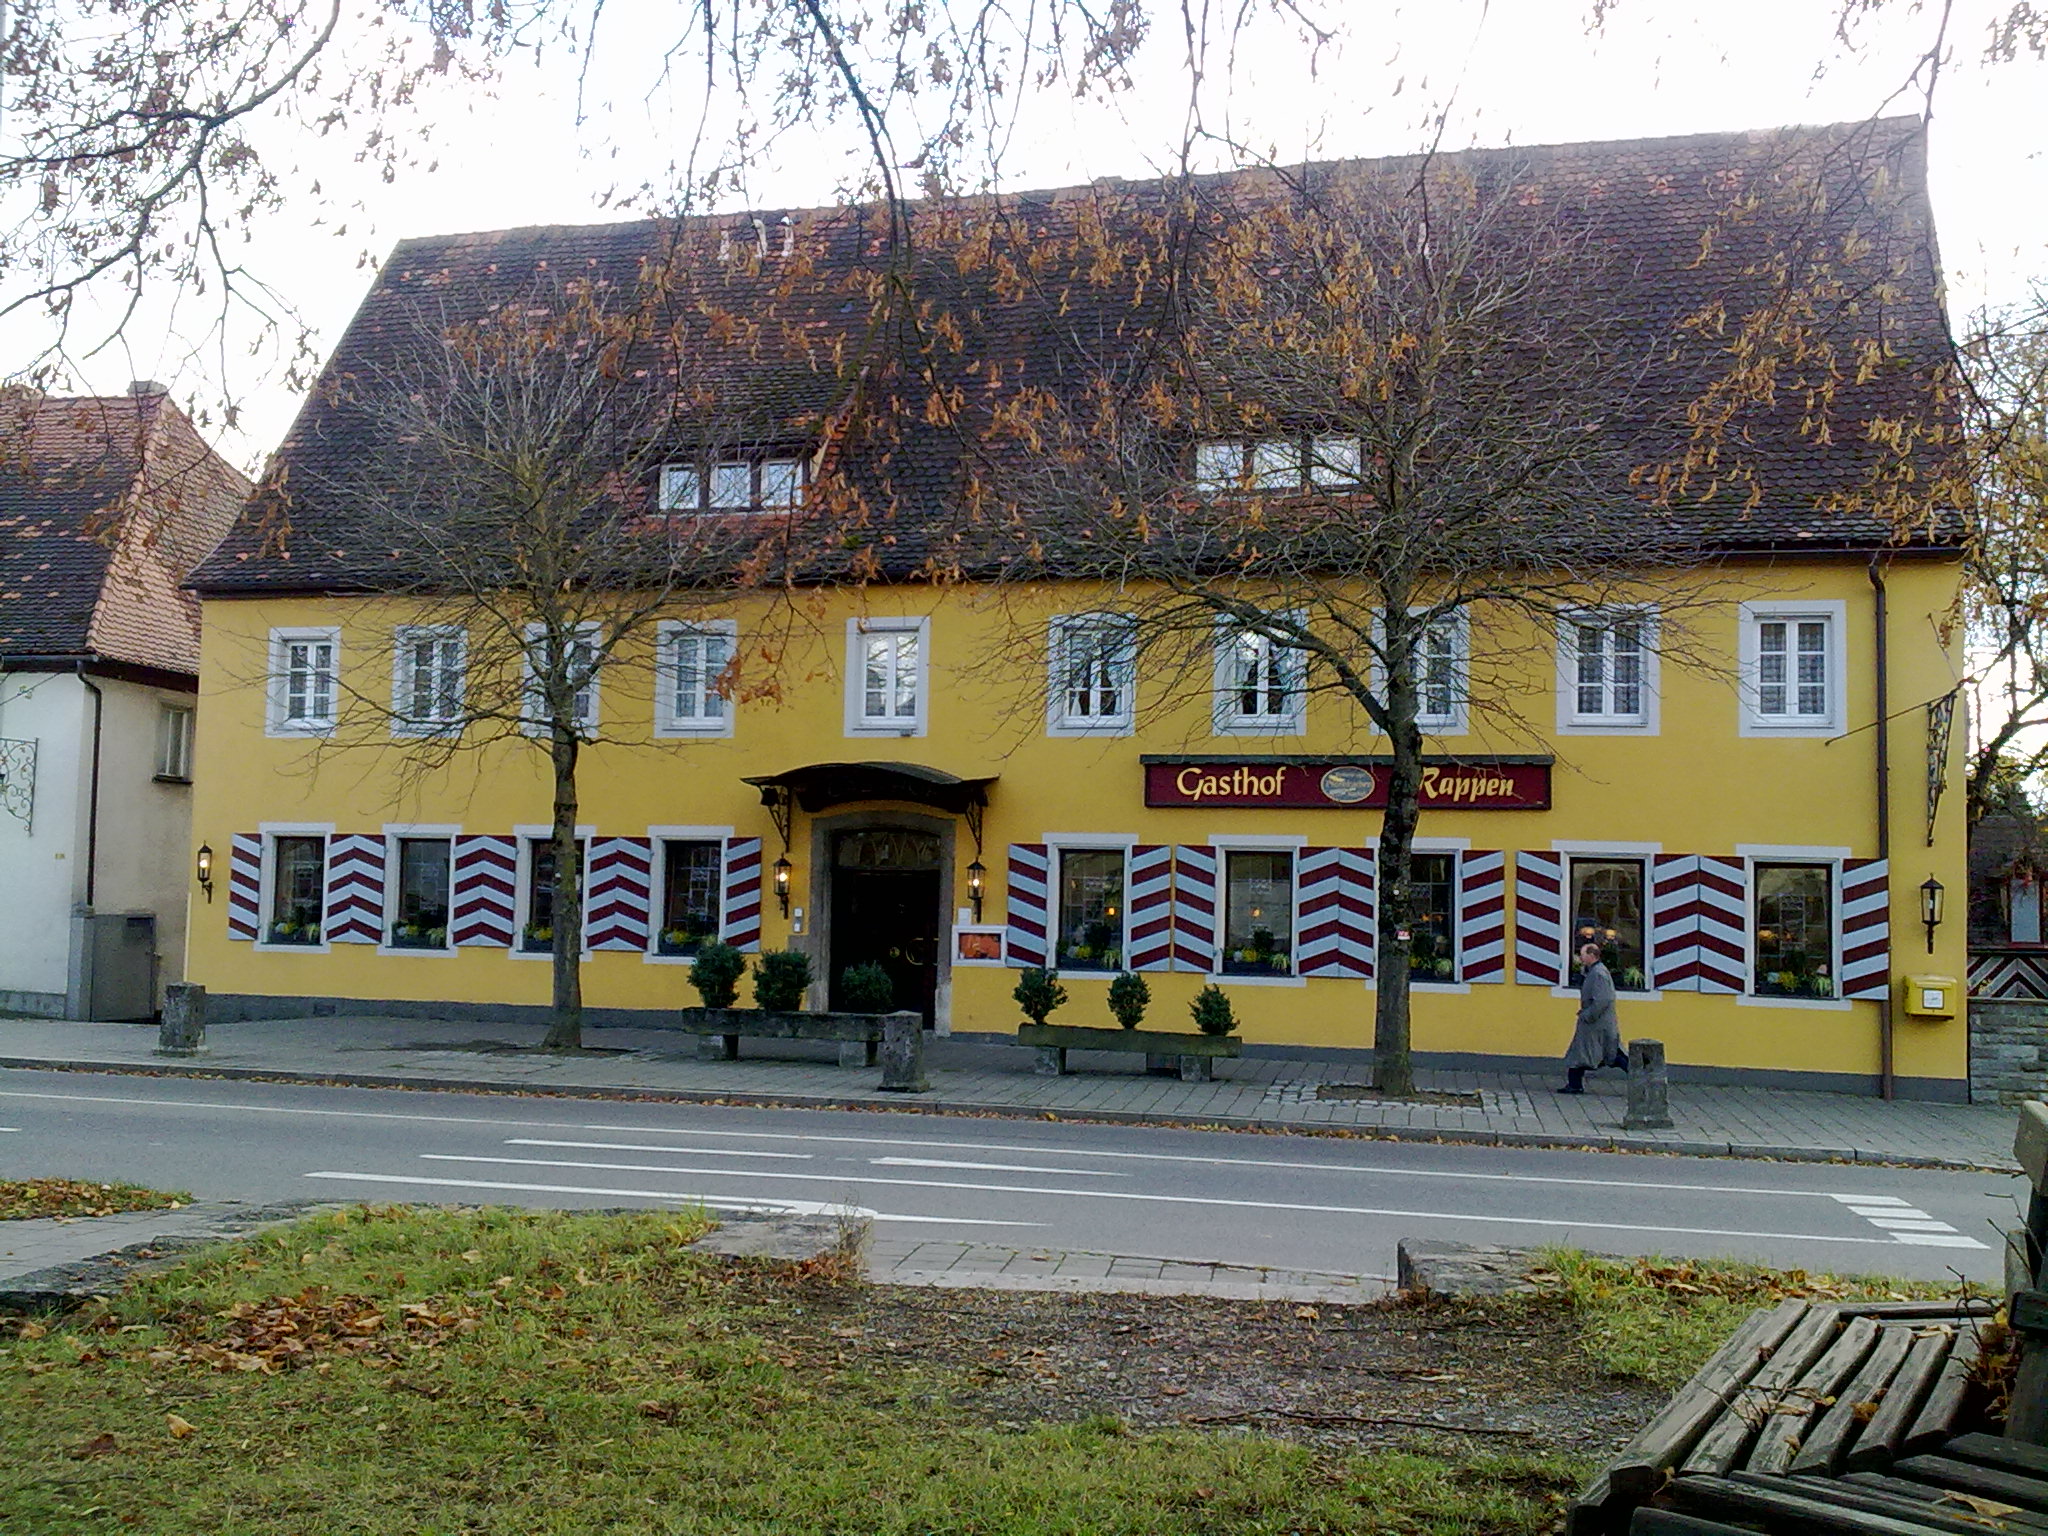 Gasthof "Zum Rappen"
Rothenburg o.d.Tauber